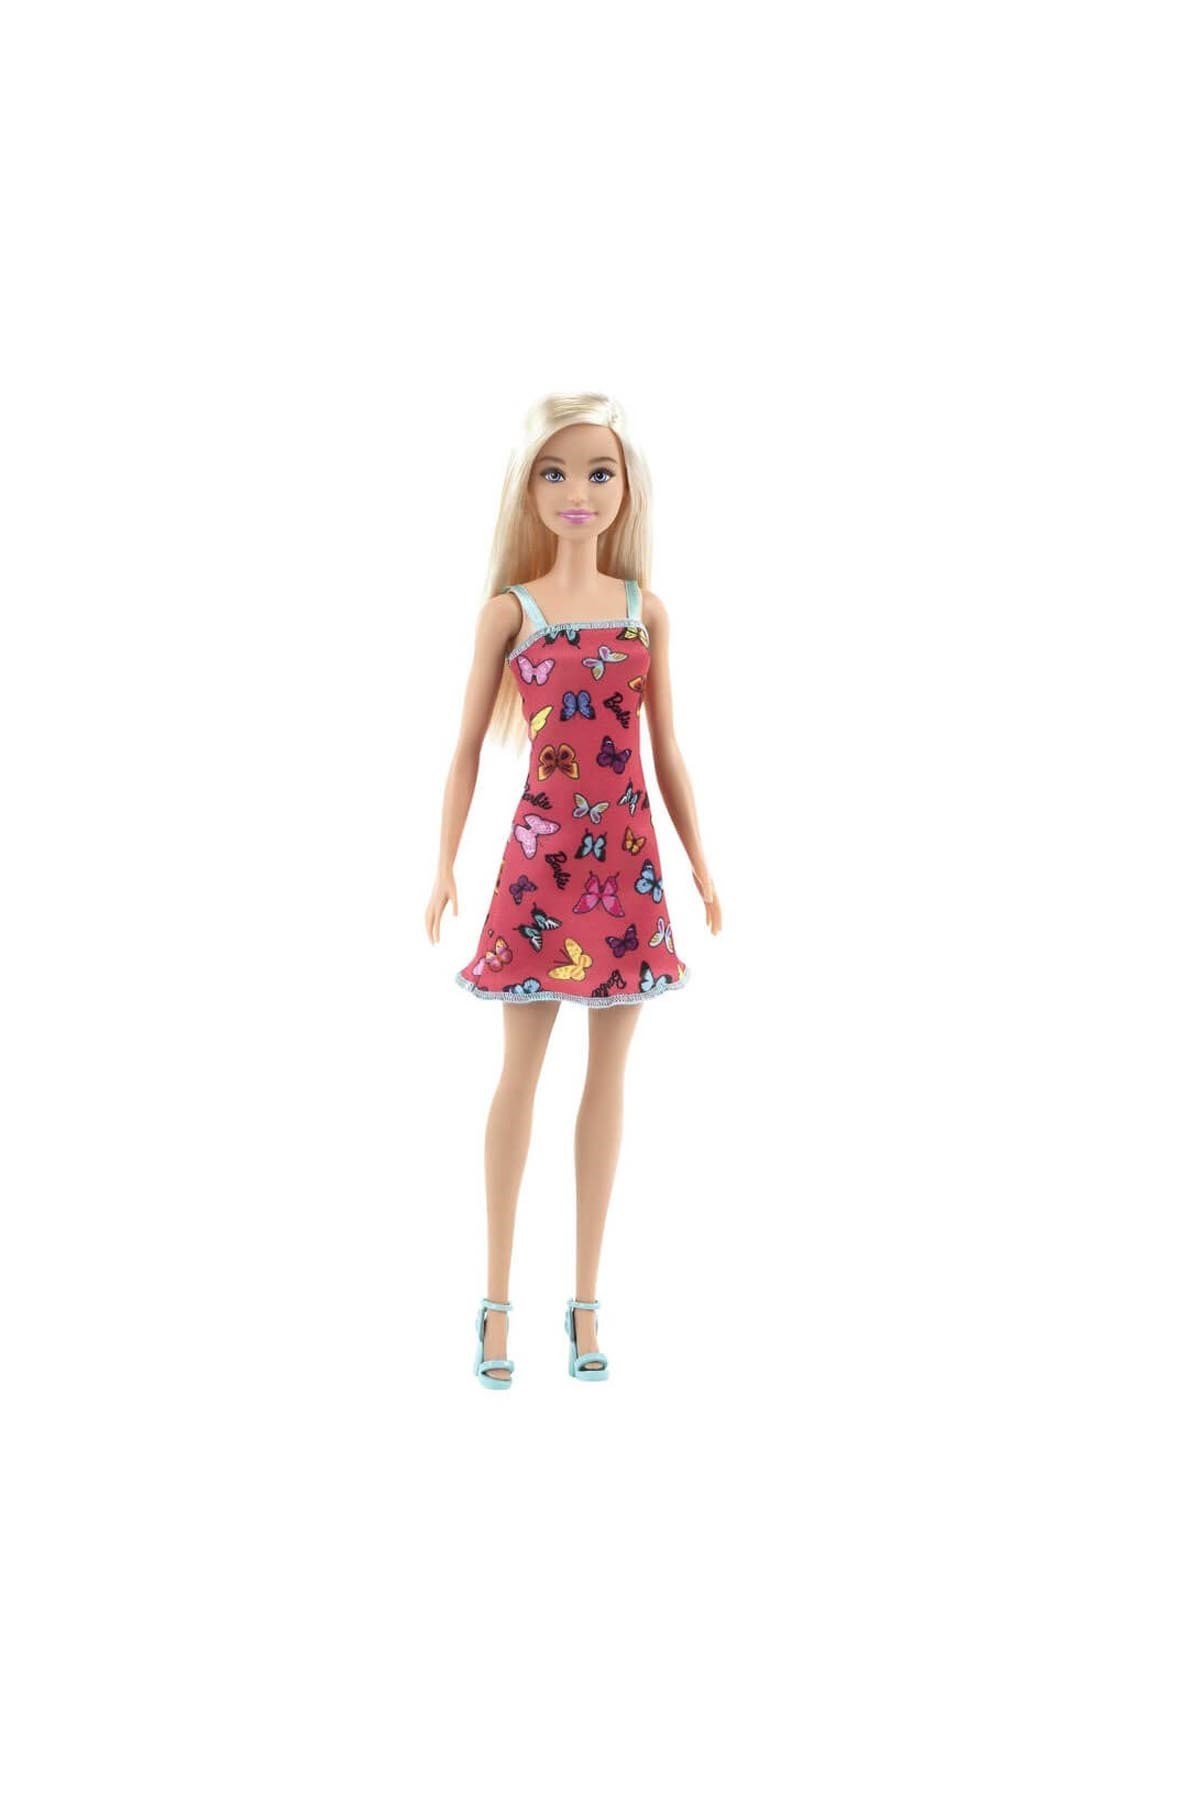 Barbie Şık Barbie Bebekler HBV05